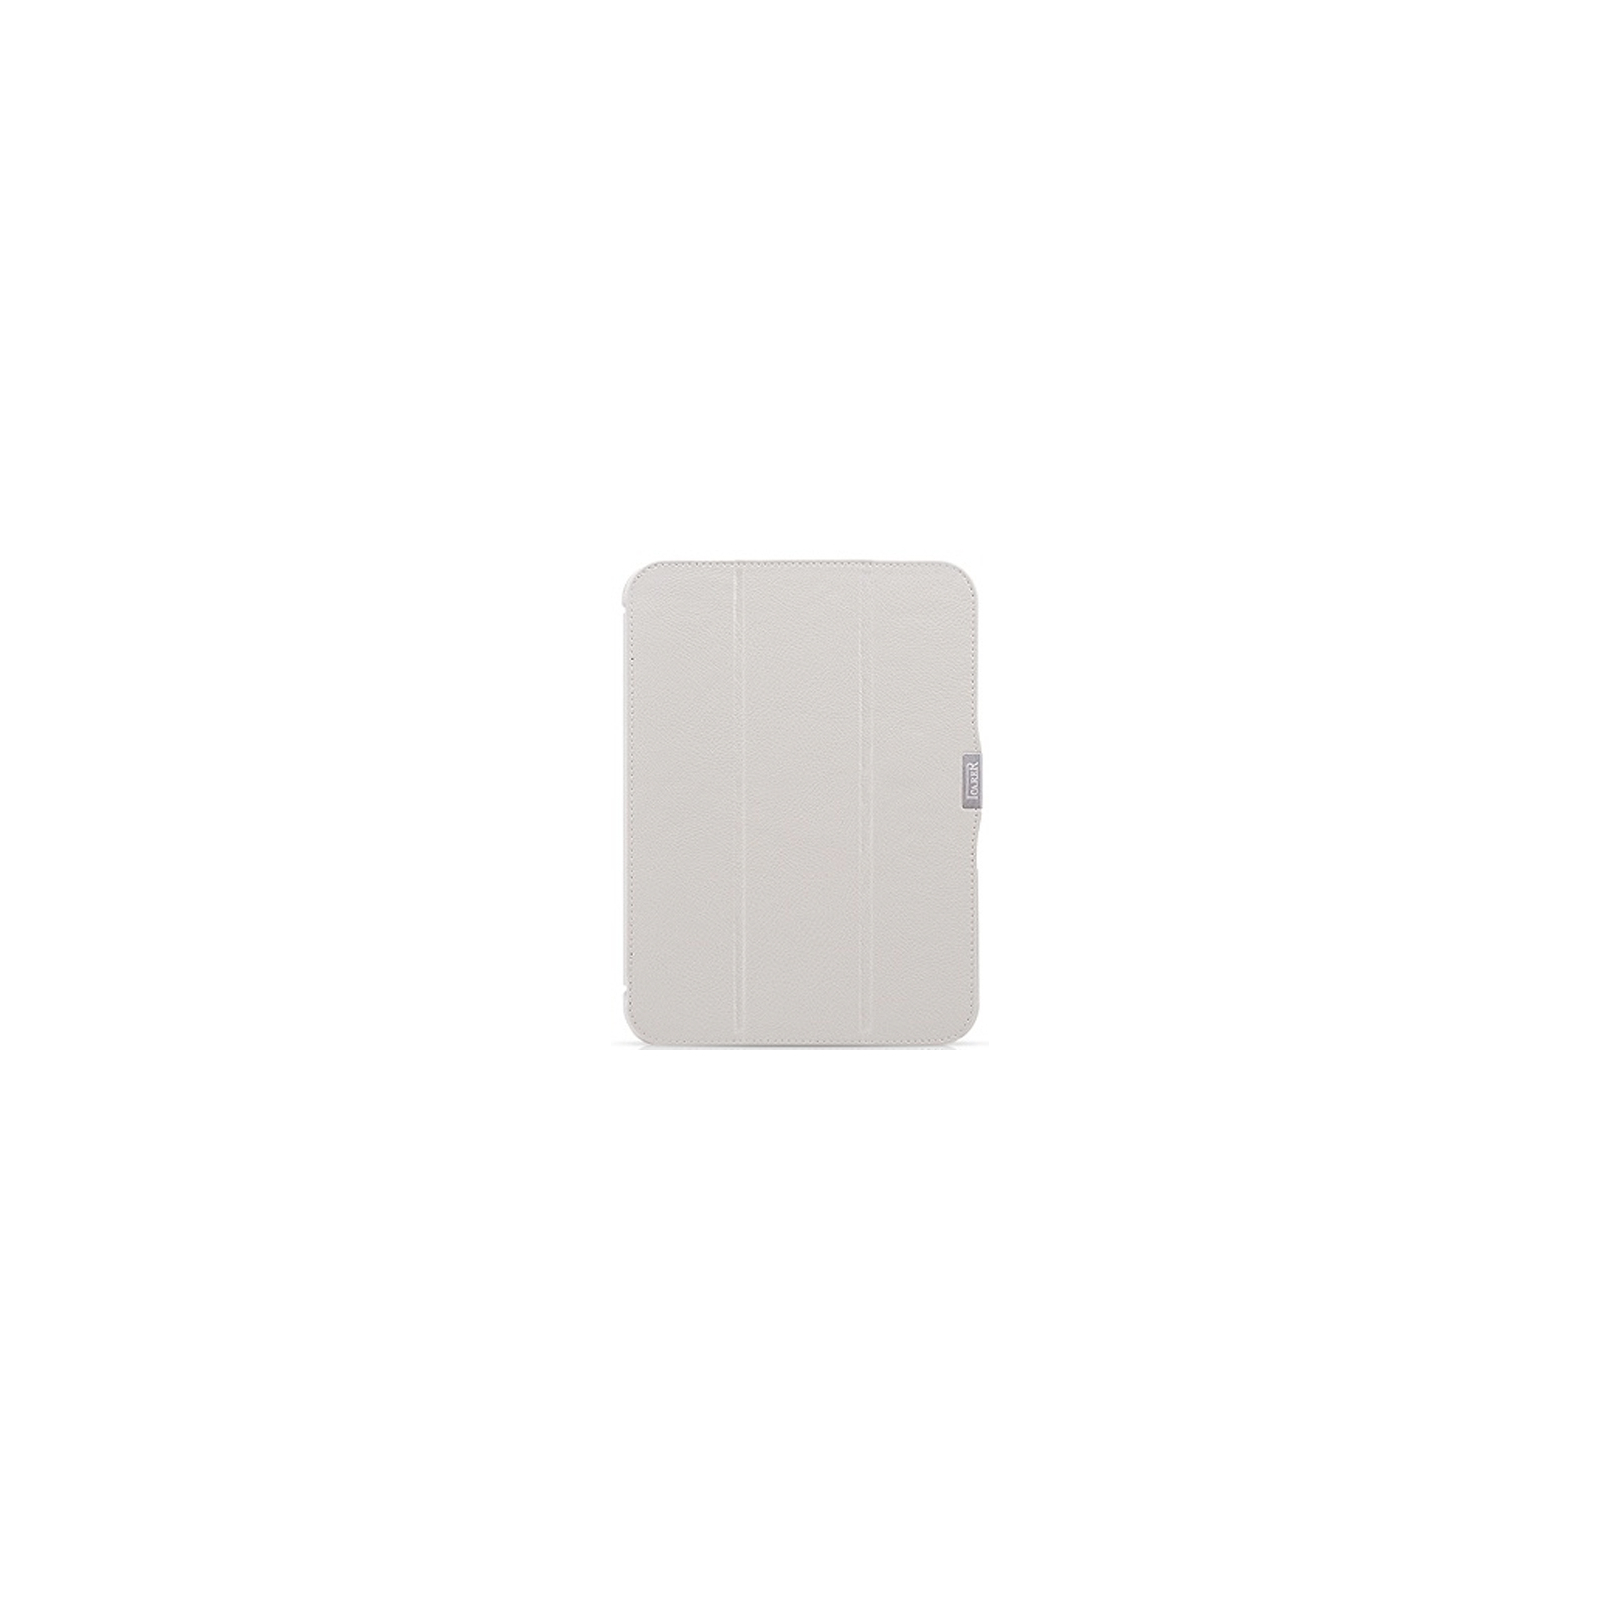 Чехол для планшета i-Carer Samsung Galaxy Tab3 P5200/5210 10.1 White (RS521001WH)